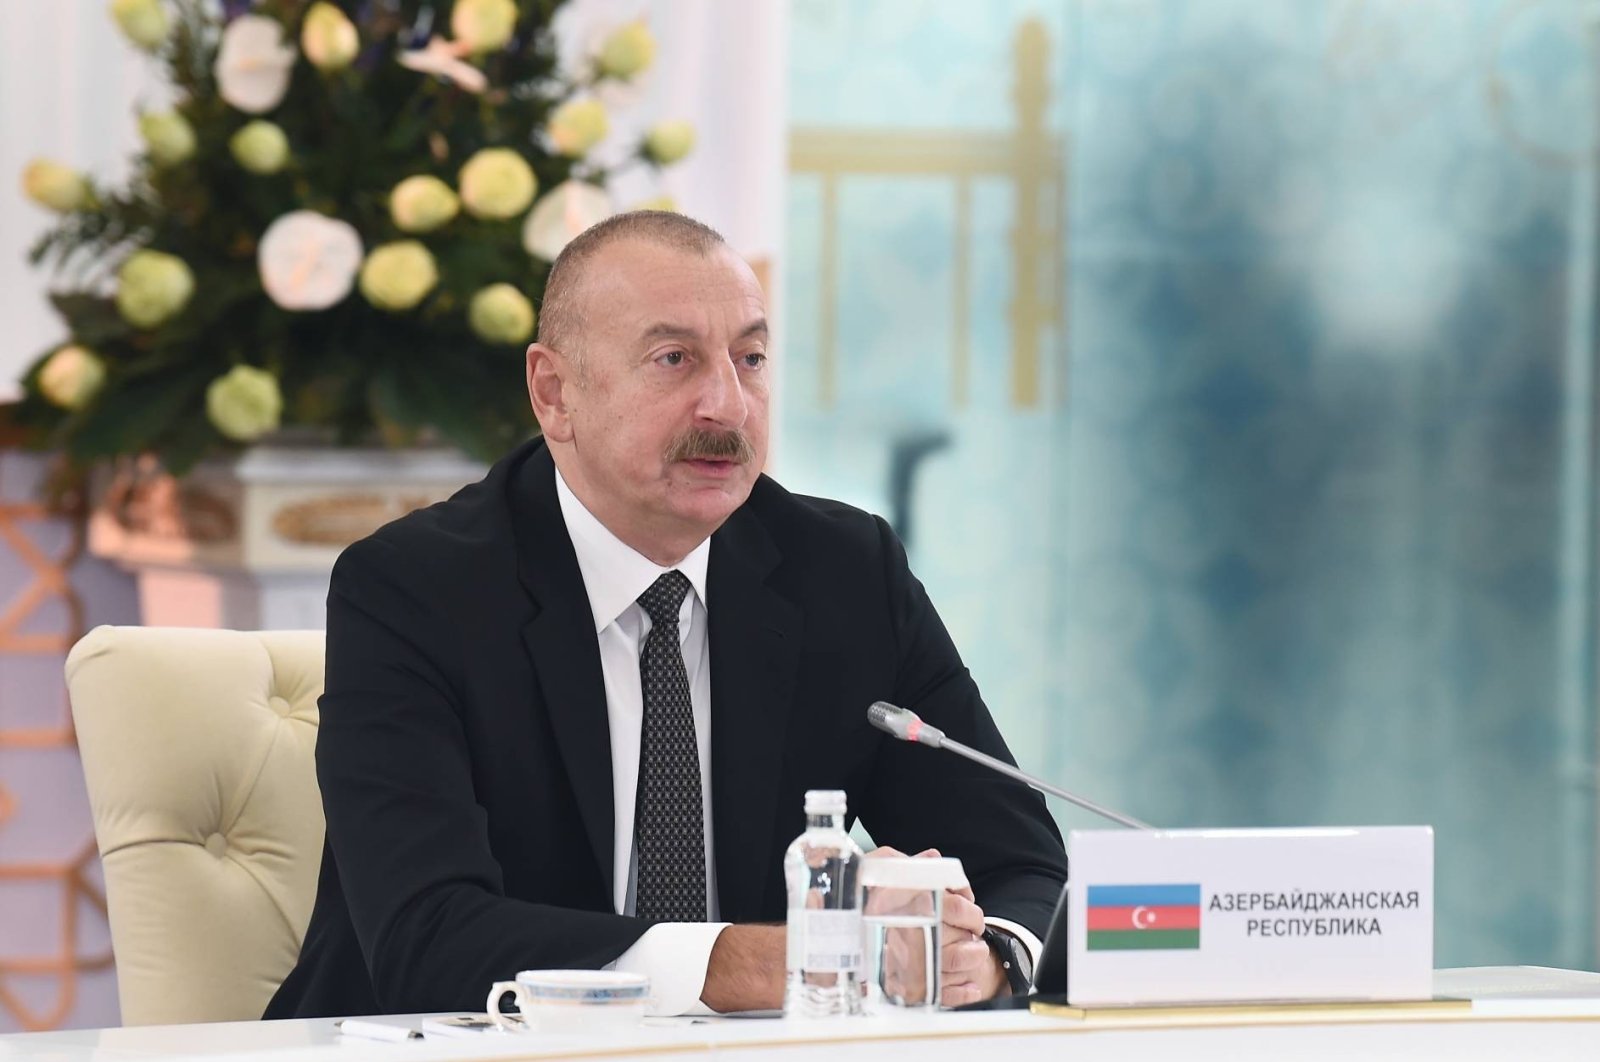 Azerbaijan criticizes Macron’s ‘groundless’ Karabakh comments